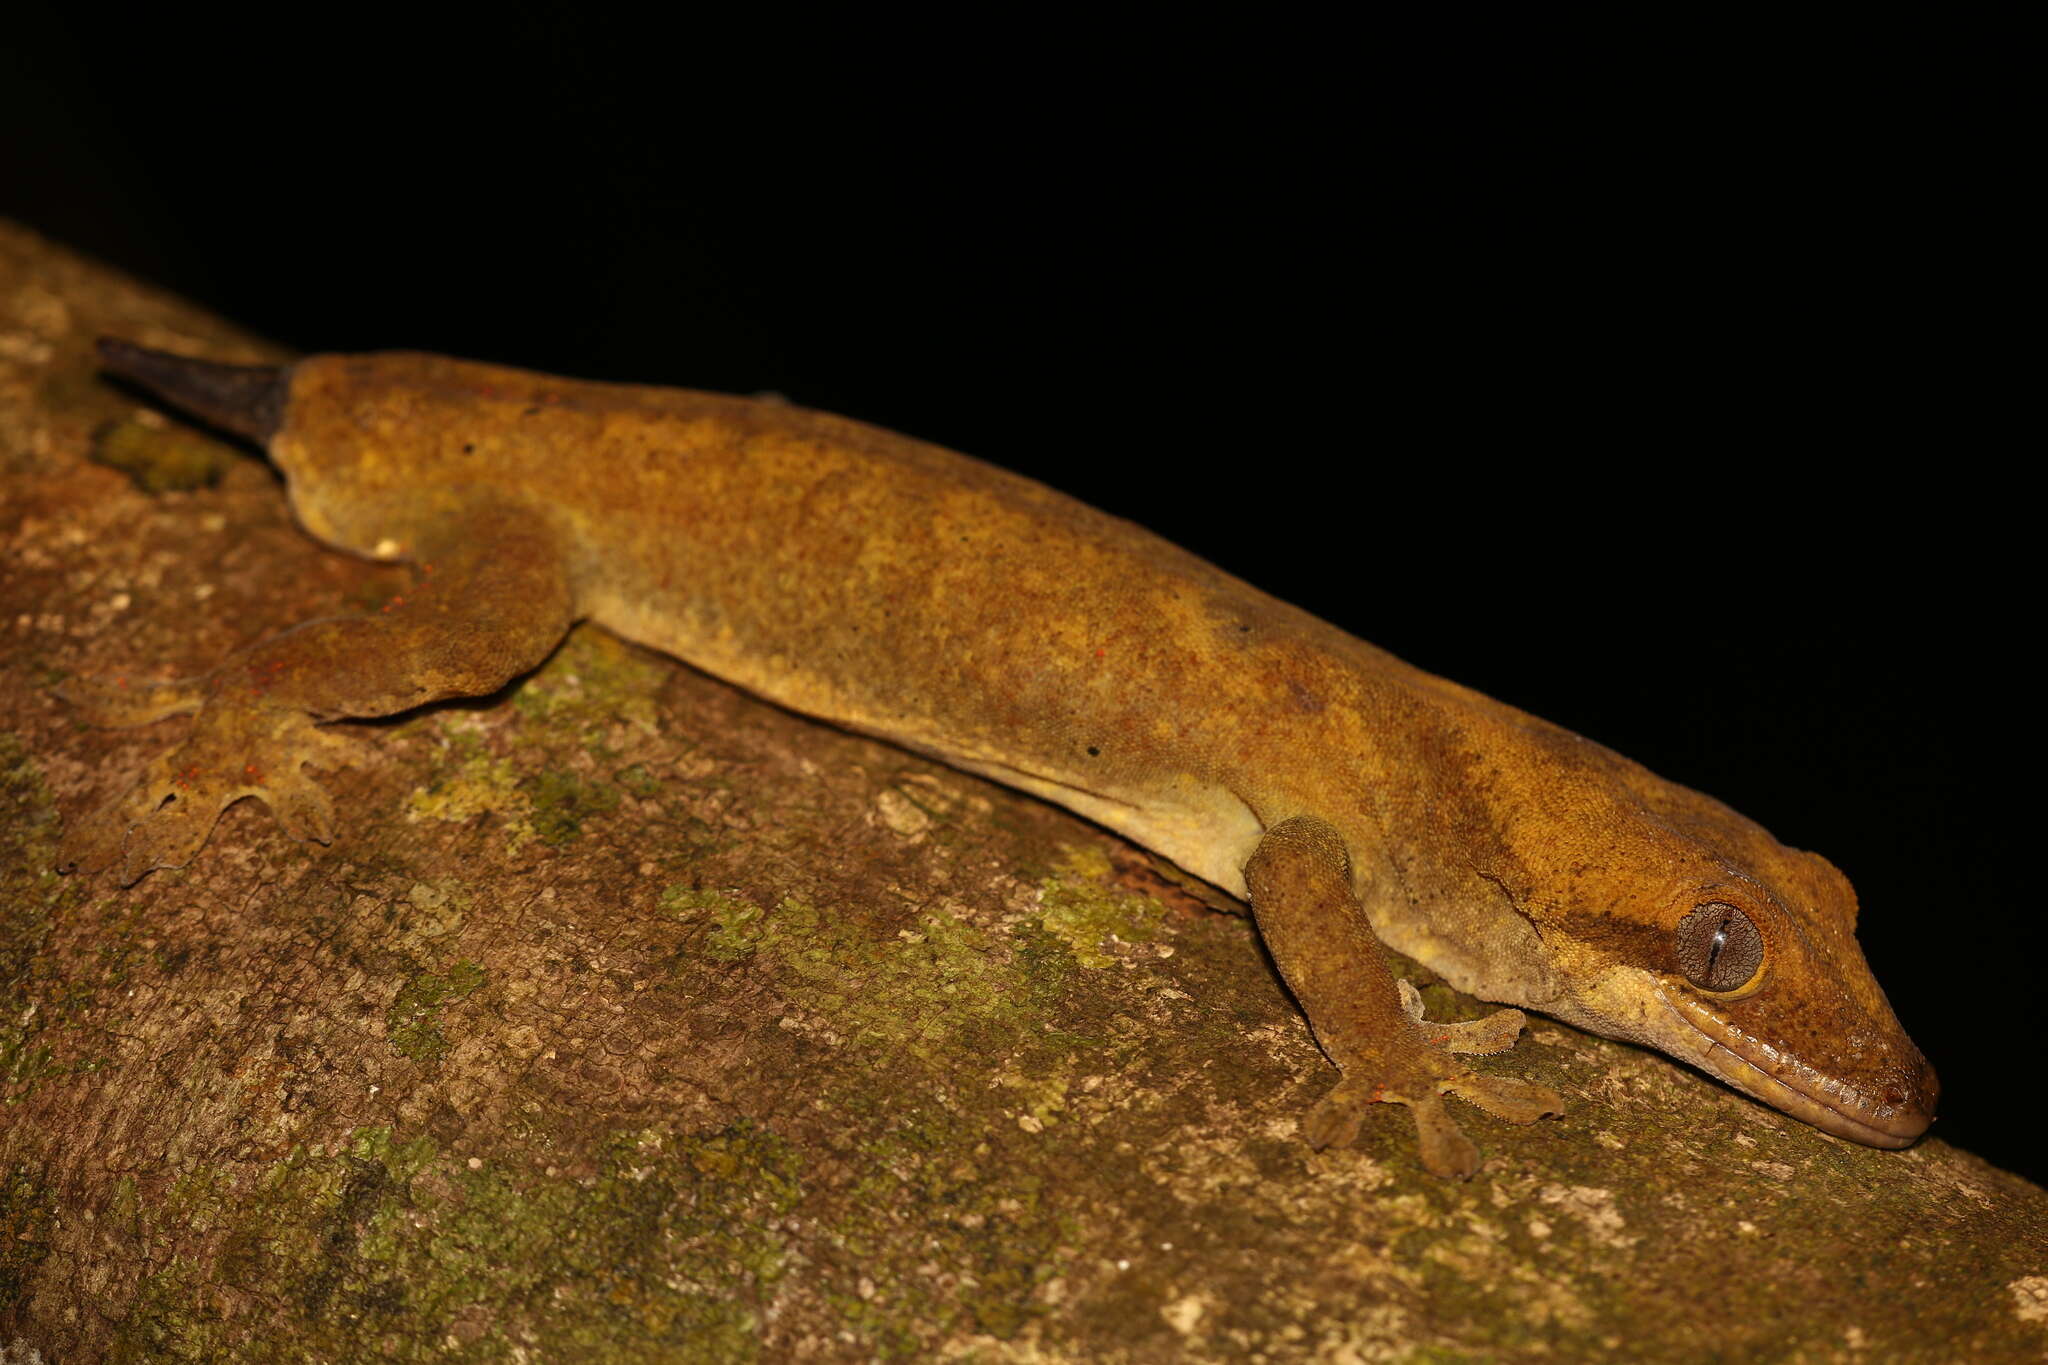 Image of Roux's Giant Gecko